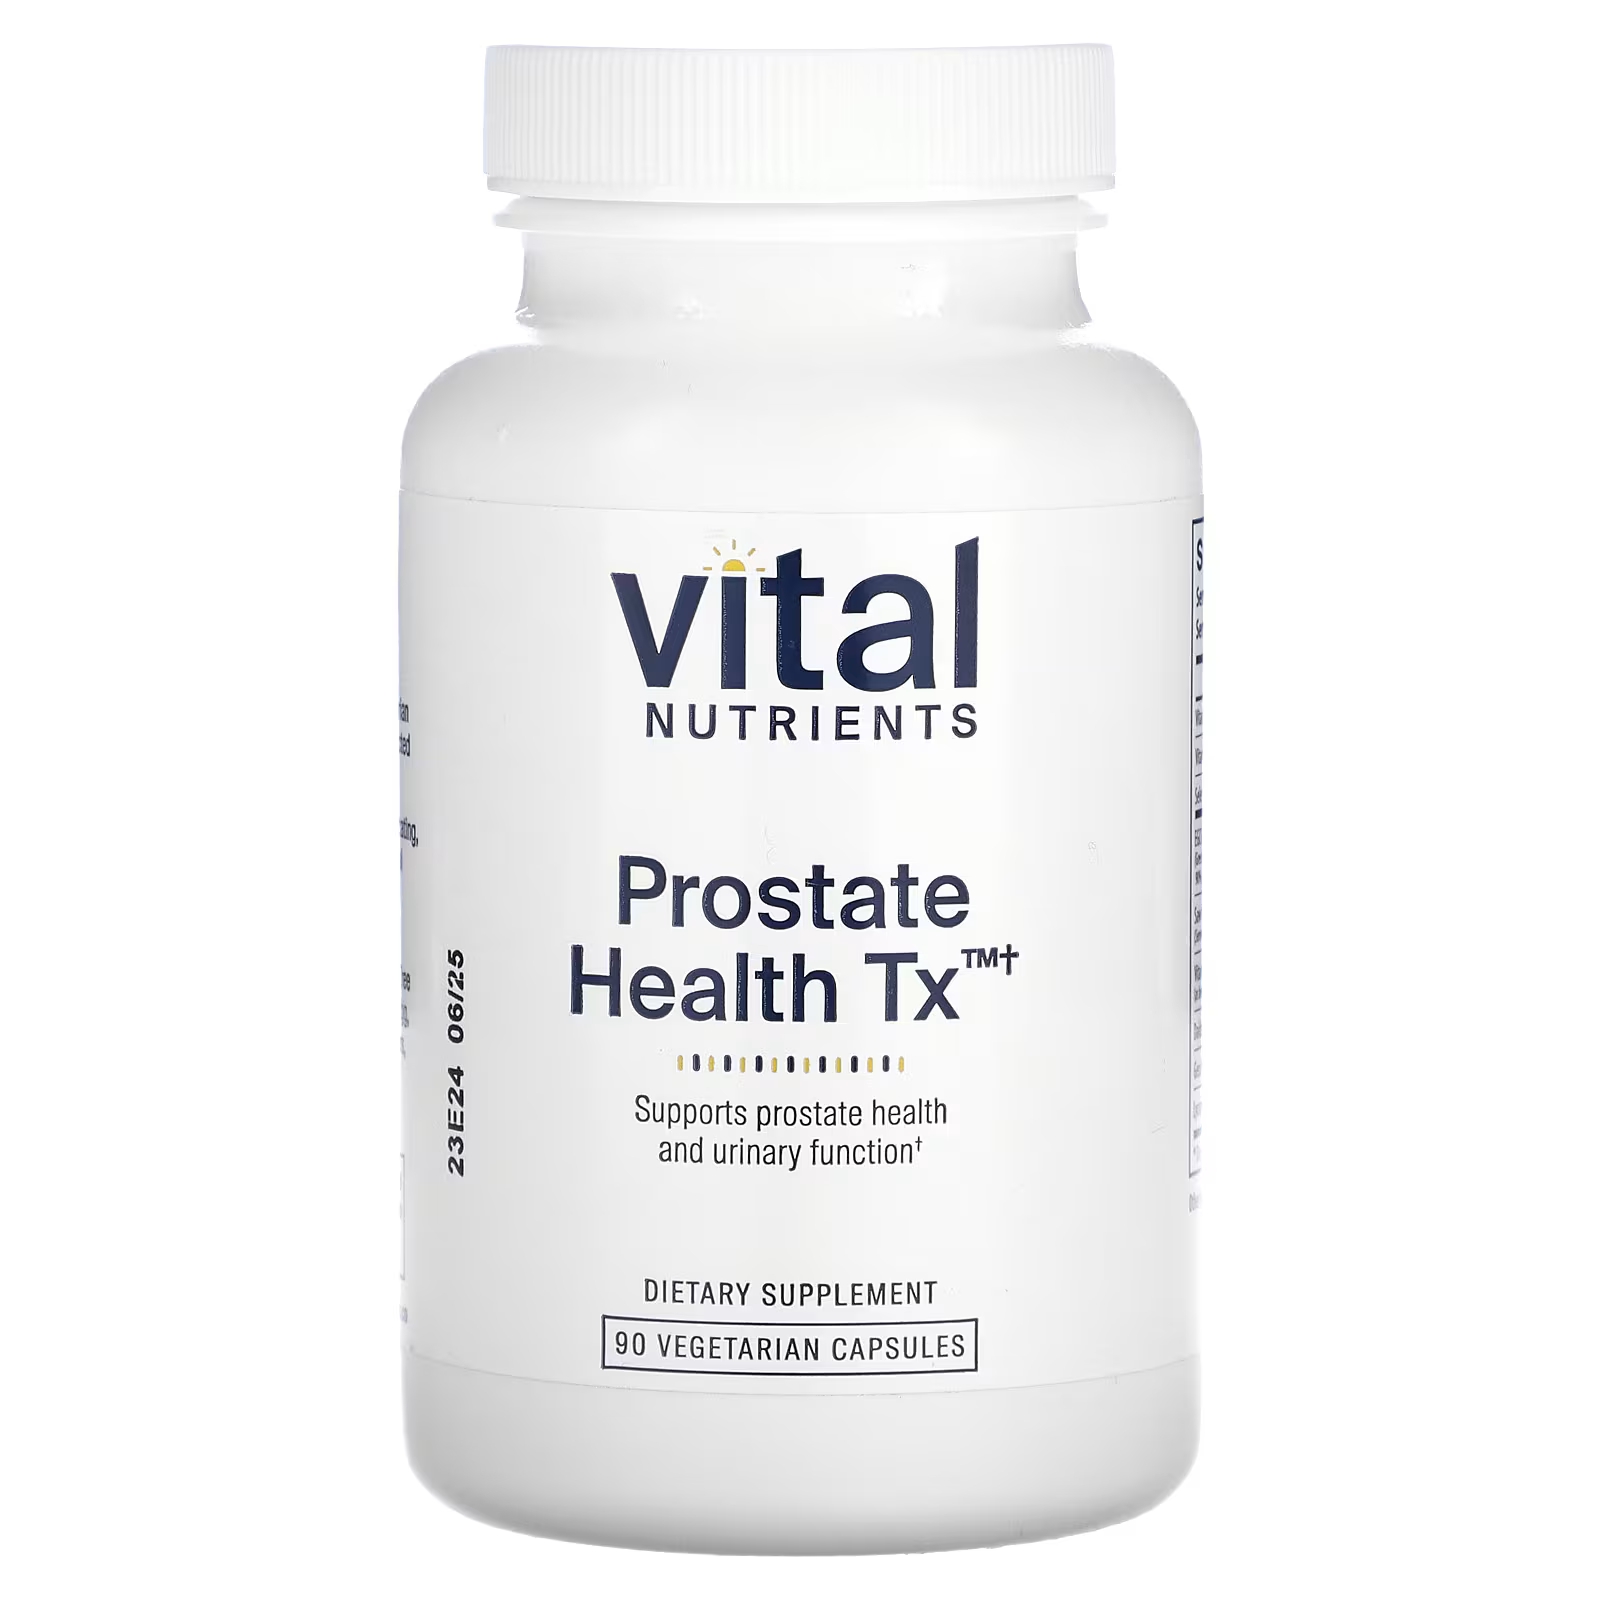 Пищевая добавка Vital Nutrients Prostate Health Tx, 90 капсул пищевая добавка fairhaven health cycleboost 180 порций